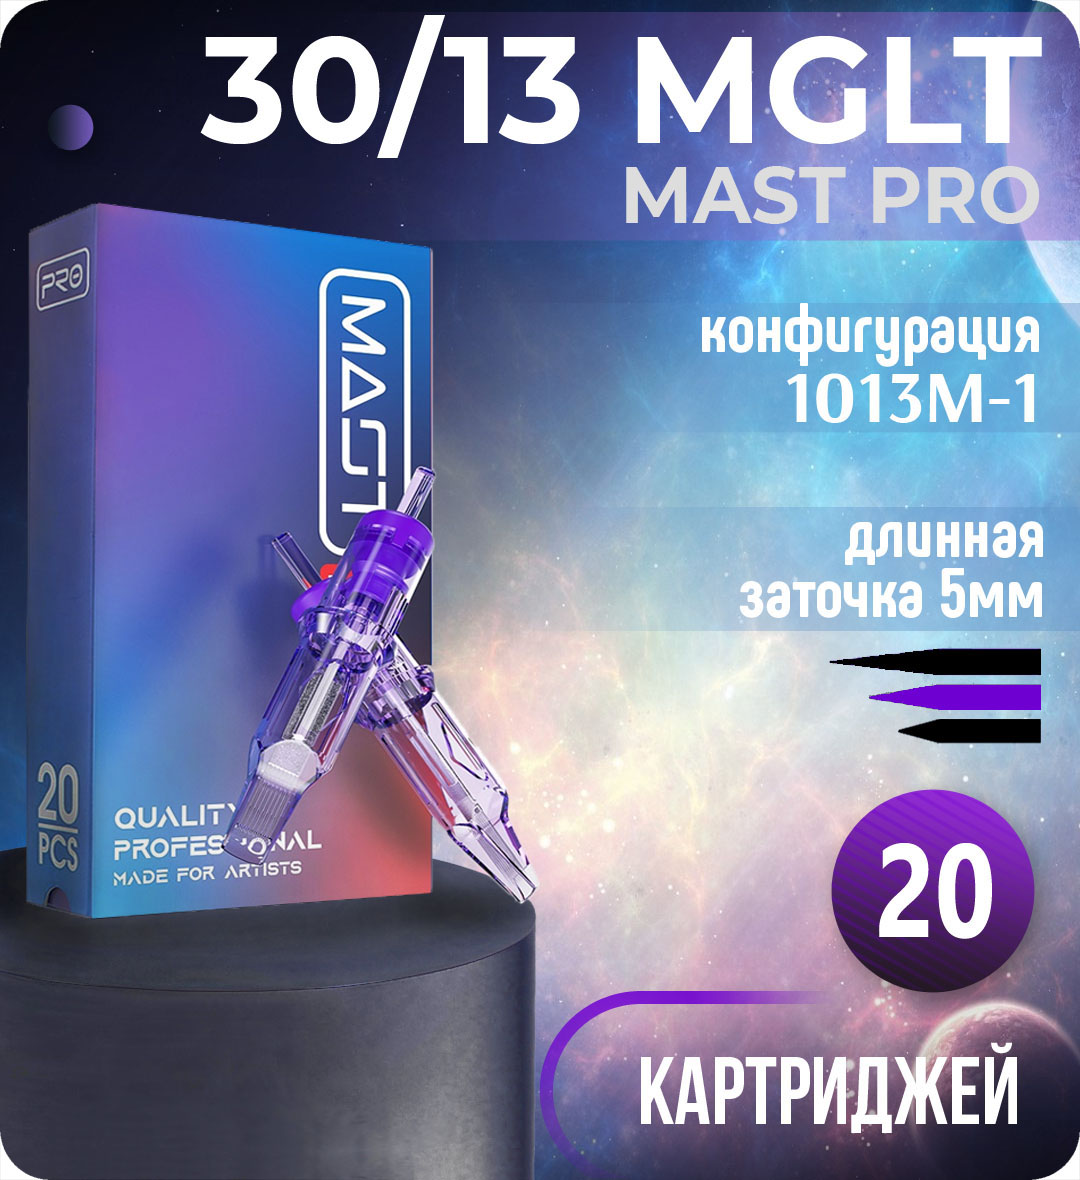 Картриджи Mast Pro 30/13 MGLT (1013M-1) для тату, перманентного макияжа и татуажа Dragonhawk 20шт